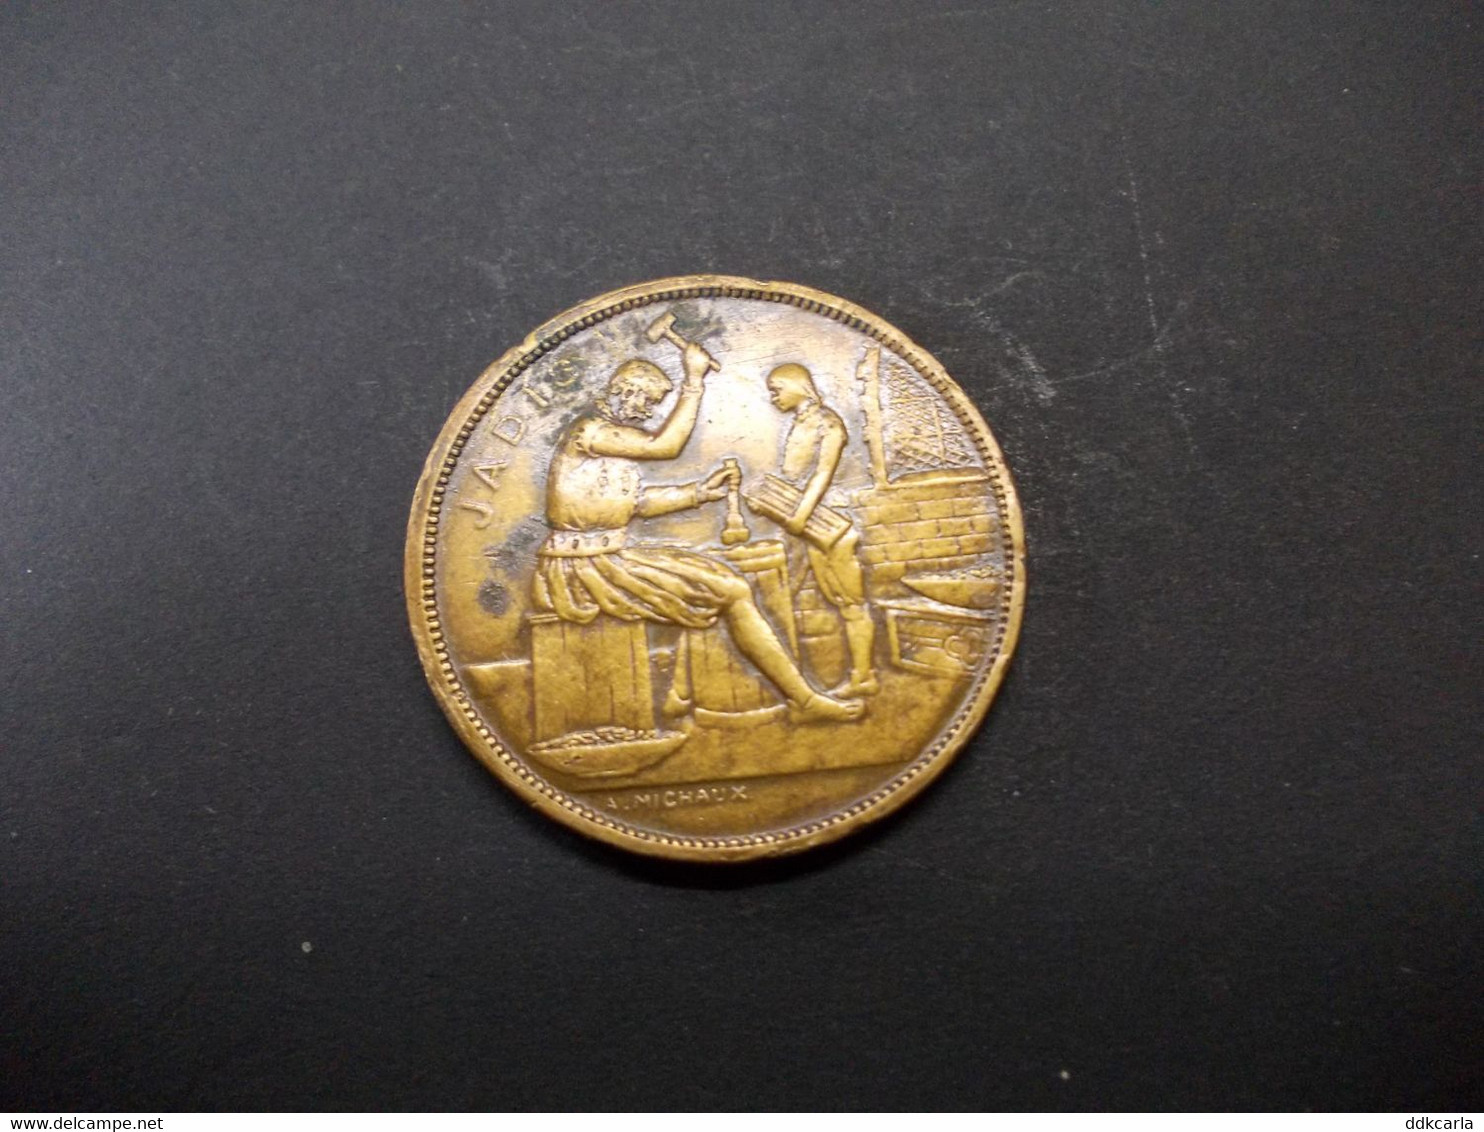 Penning - Monnaie De Bruxelles An 1910 - Souvenir-Medaille (elongated Coins)